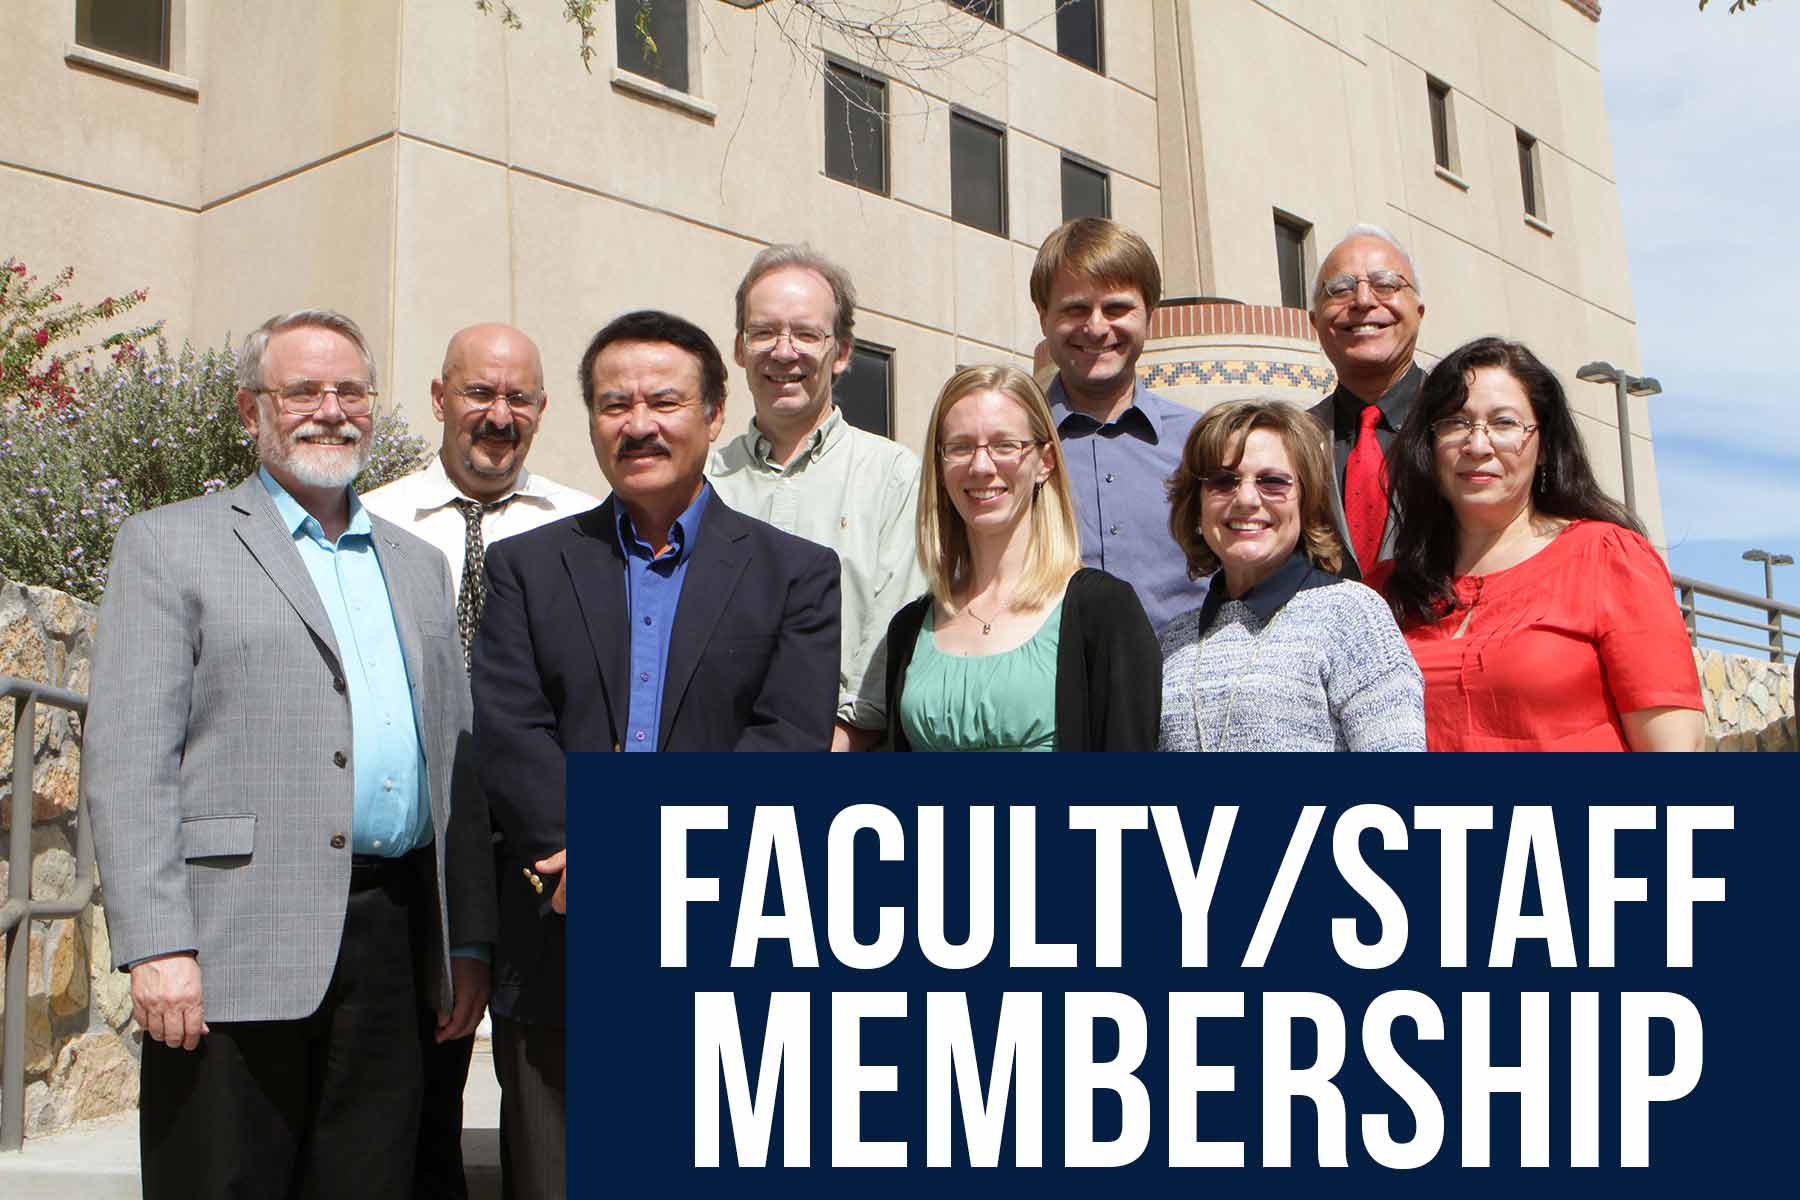 Faculty/Staff Membership